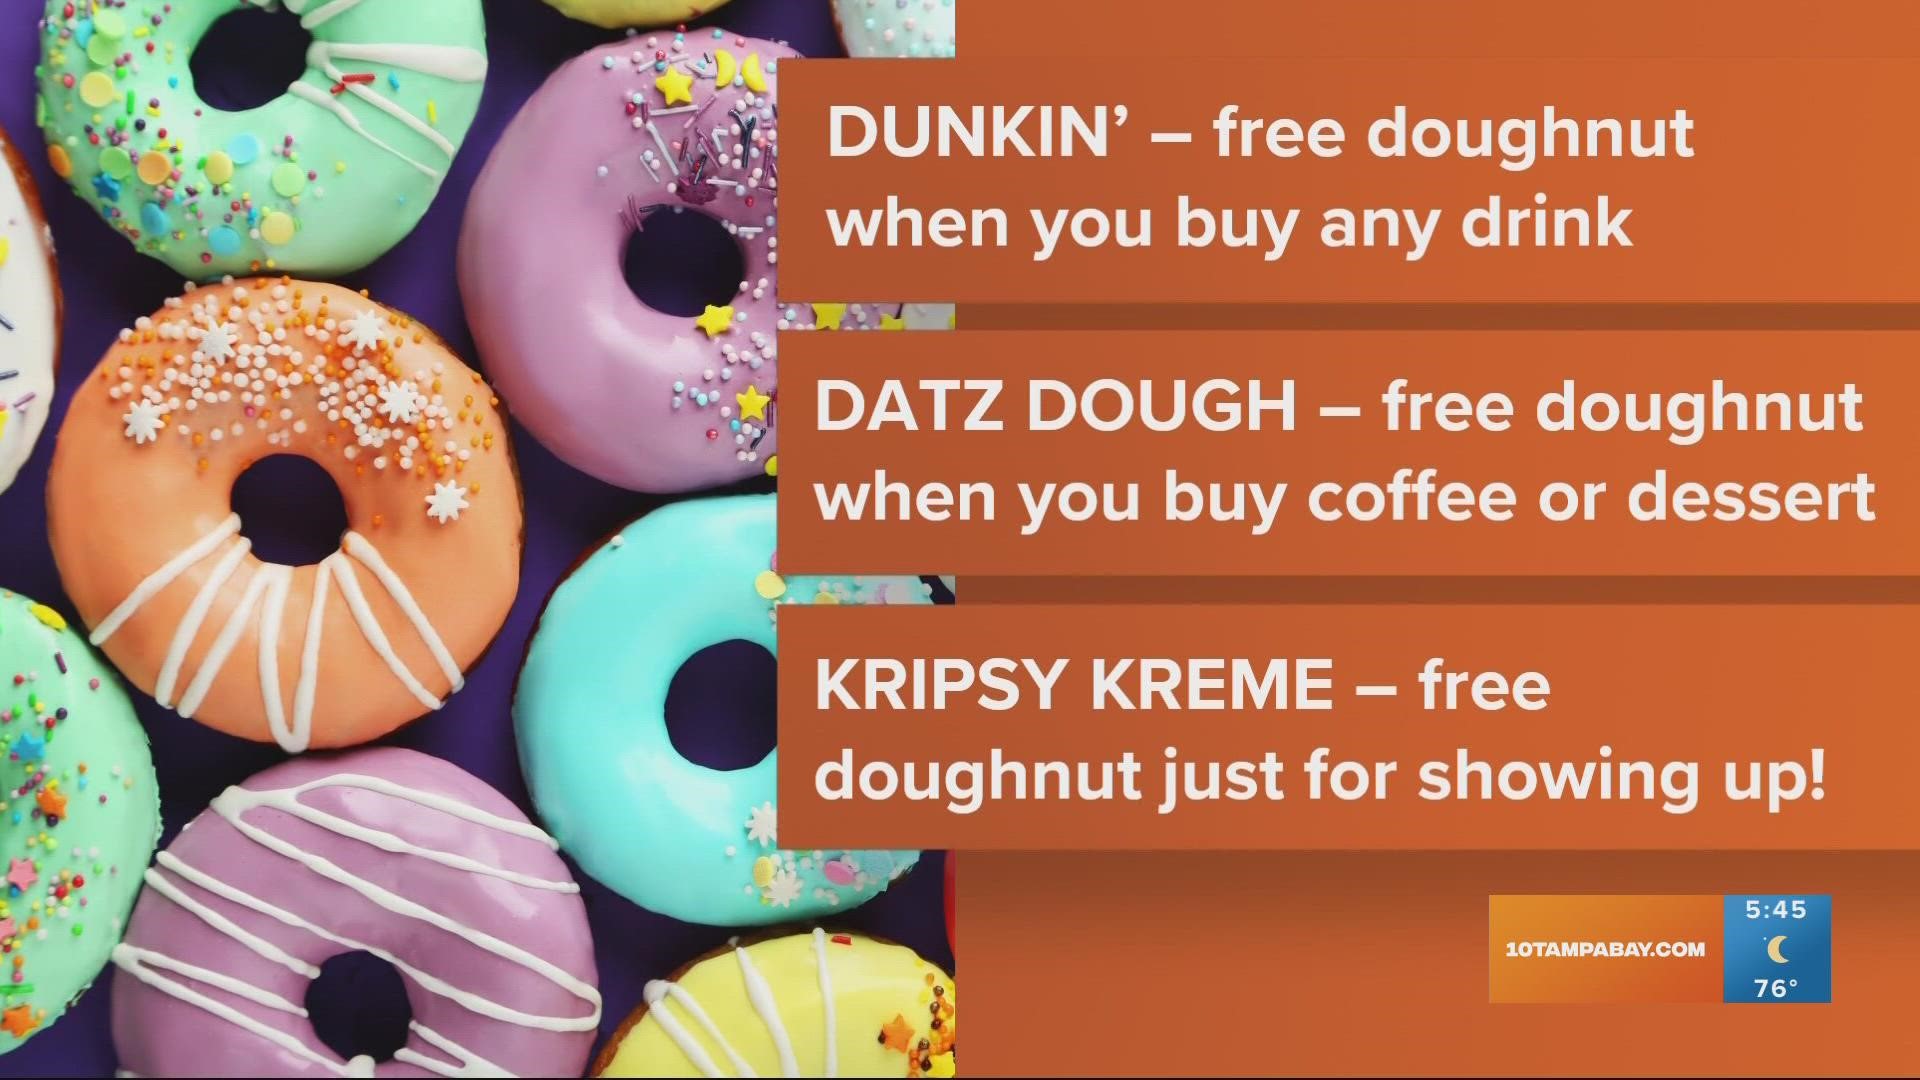 Dunkin', Datz and Krispy Kreme all have special deals.